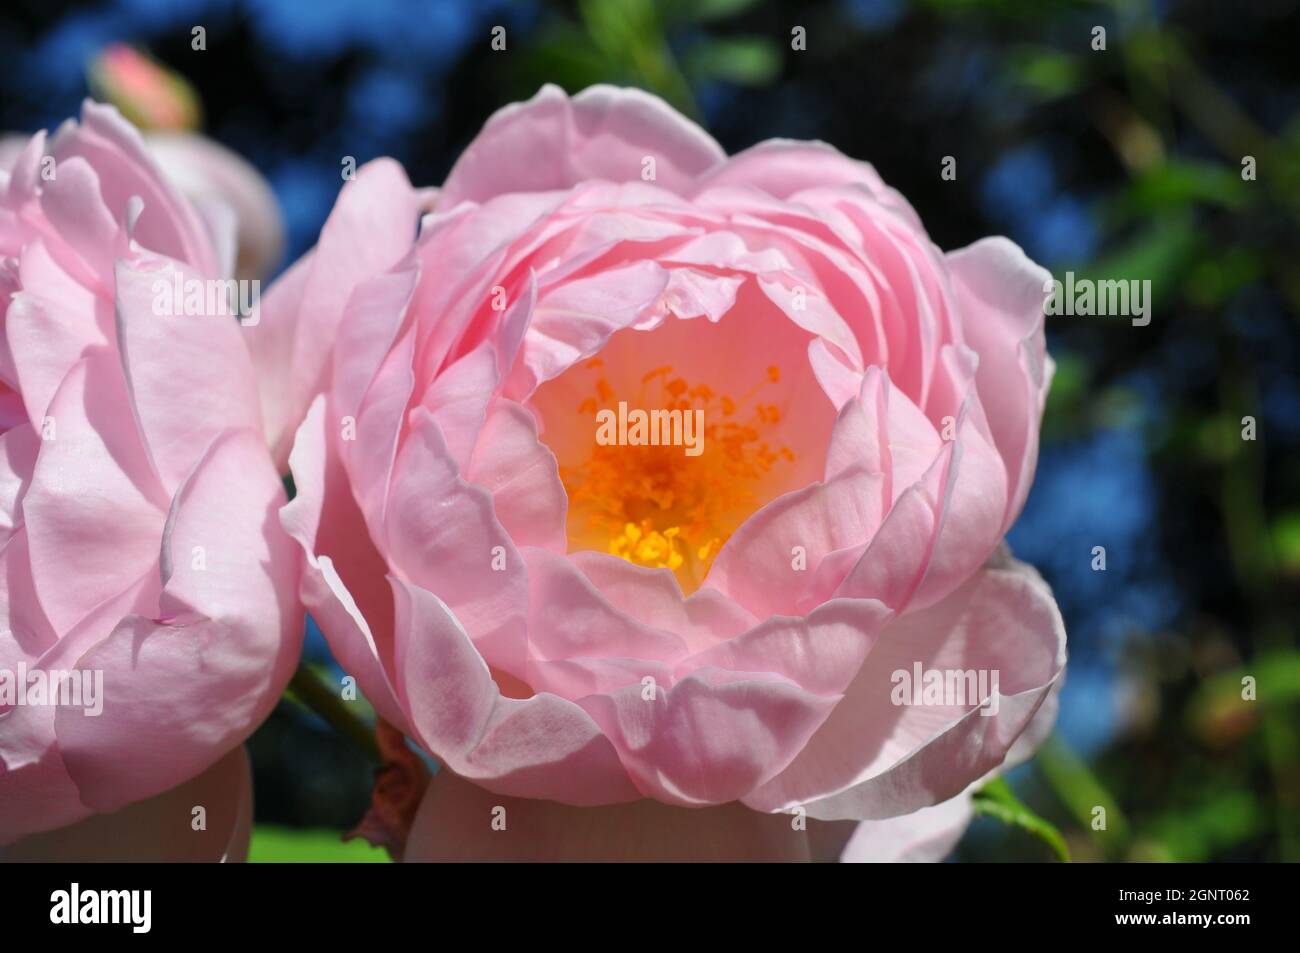 detailaufnahme rosa pastellfarbe blüte rose mit biene Foto Stock